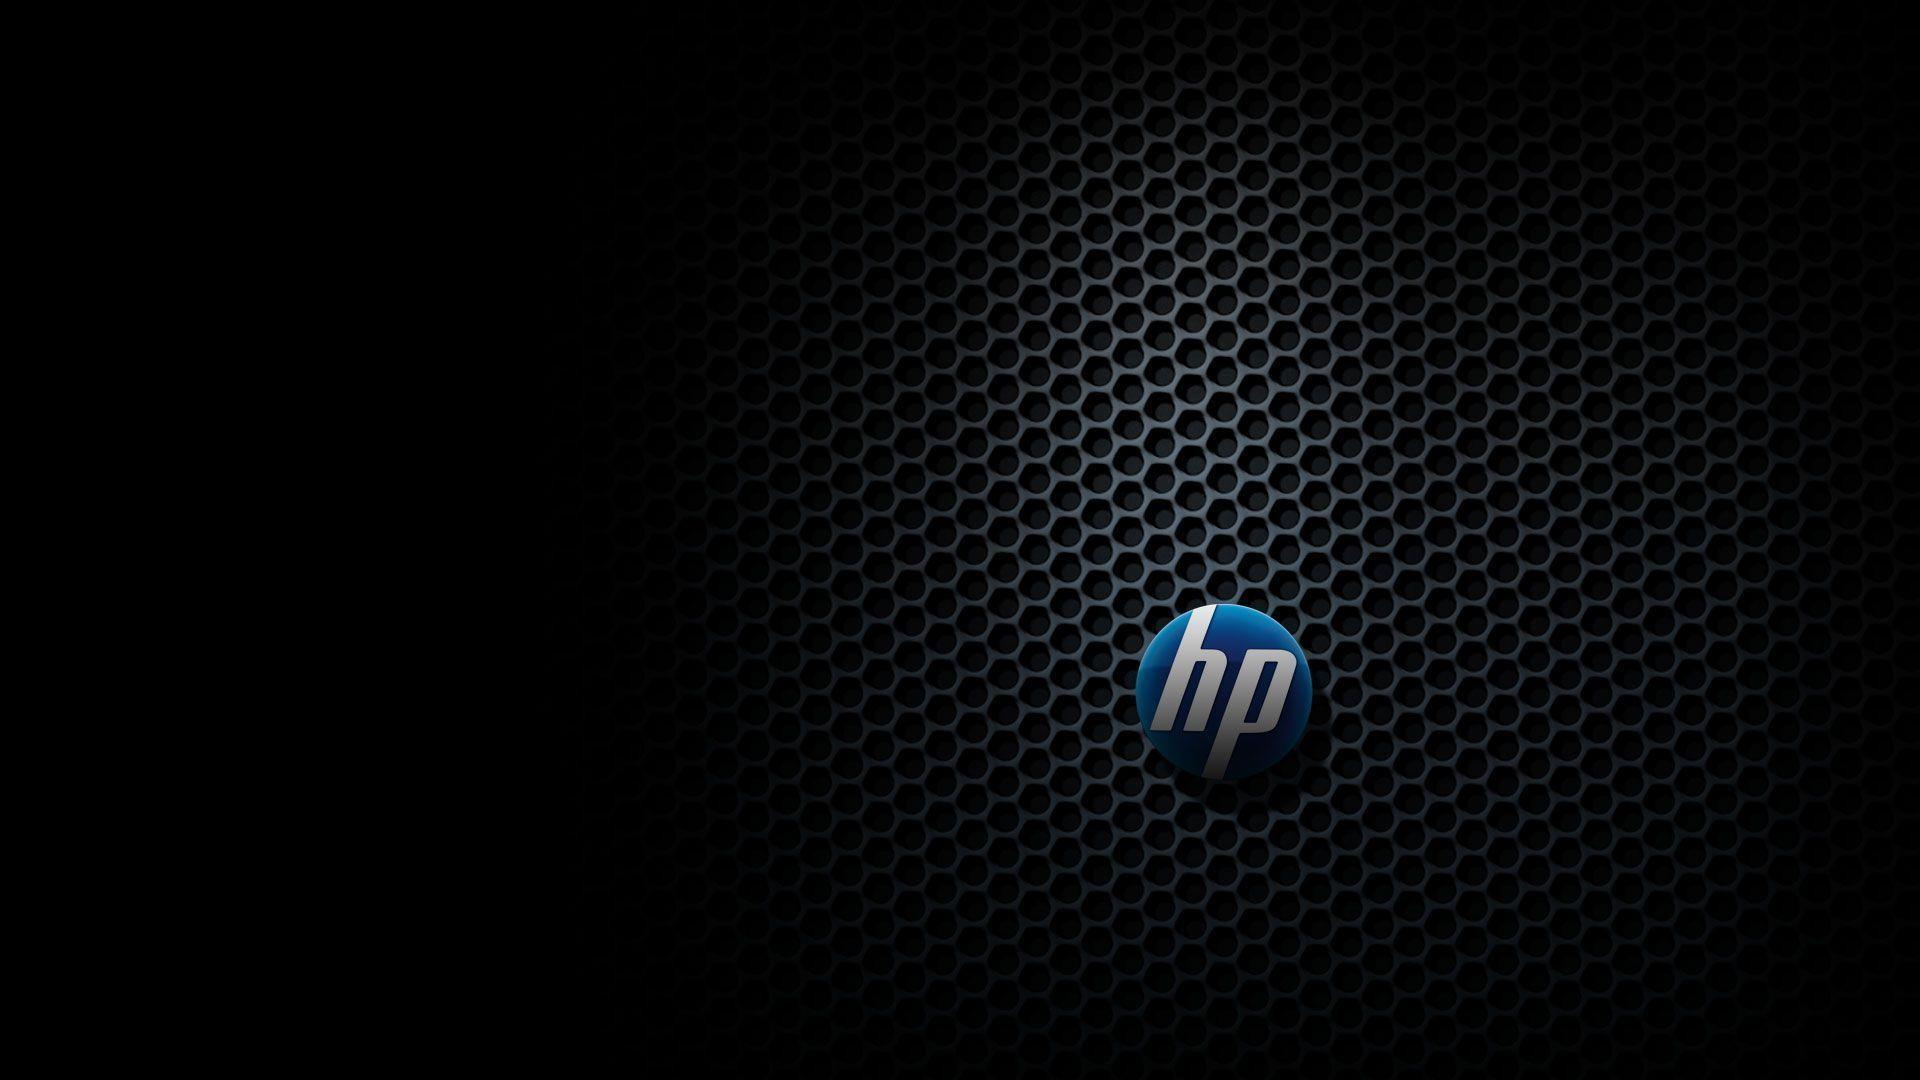 HP Laptop Wallpaper